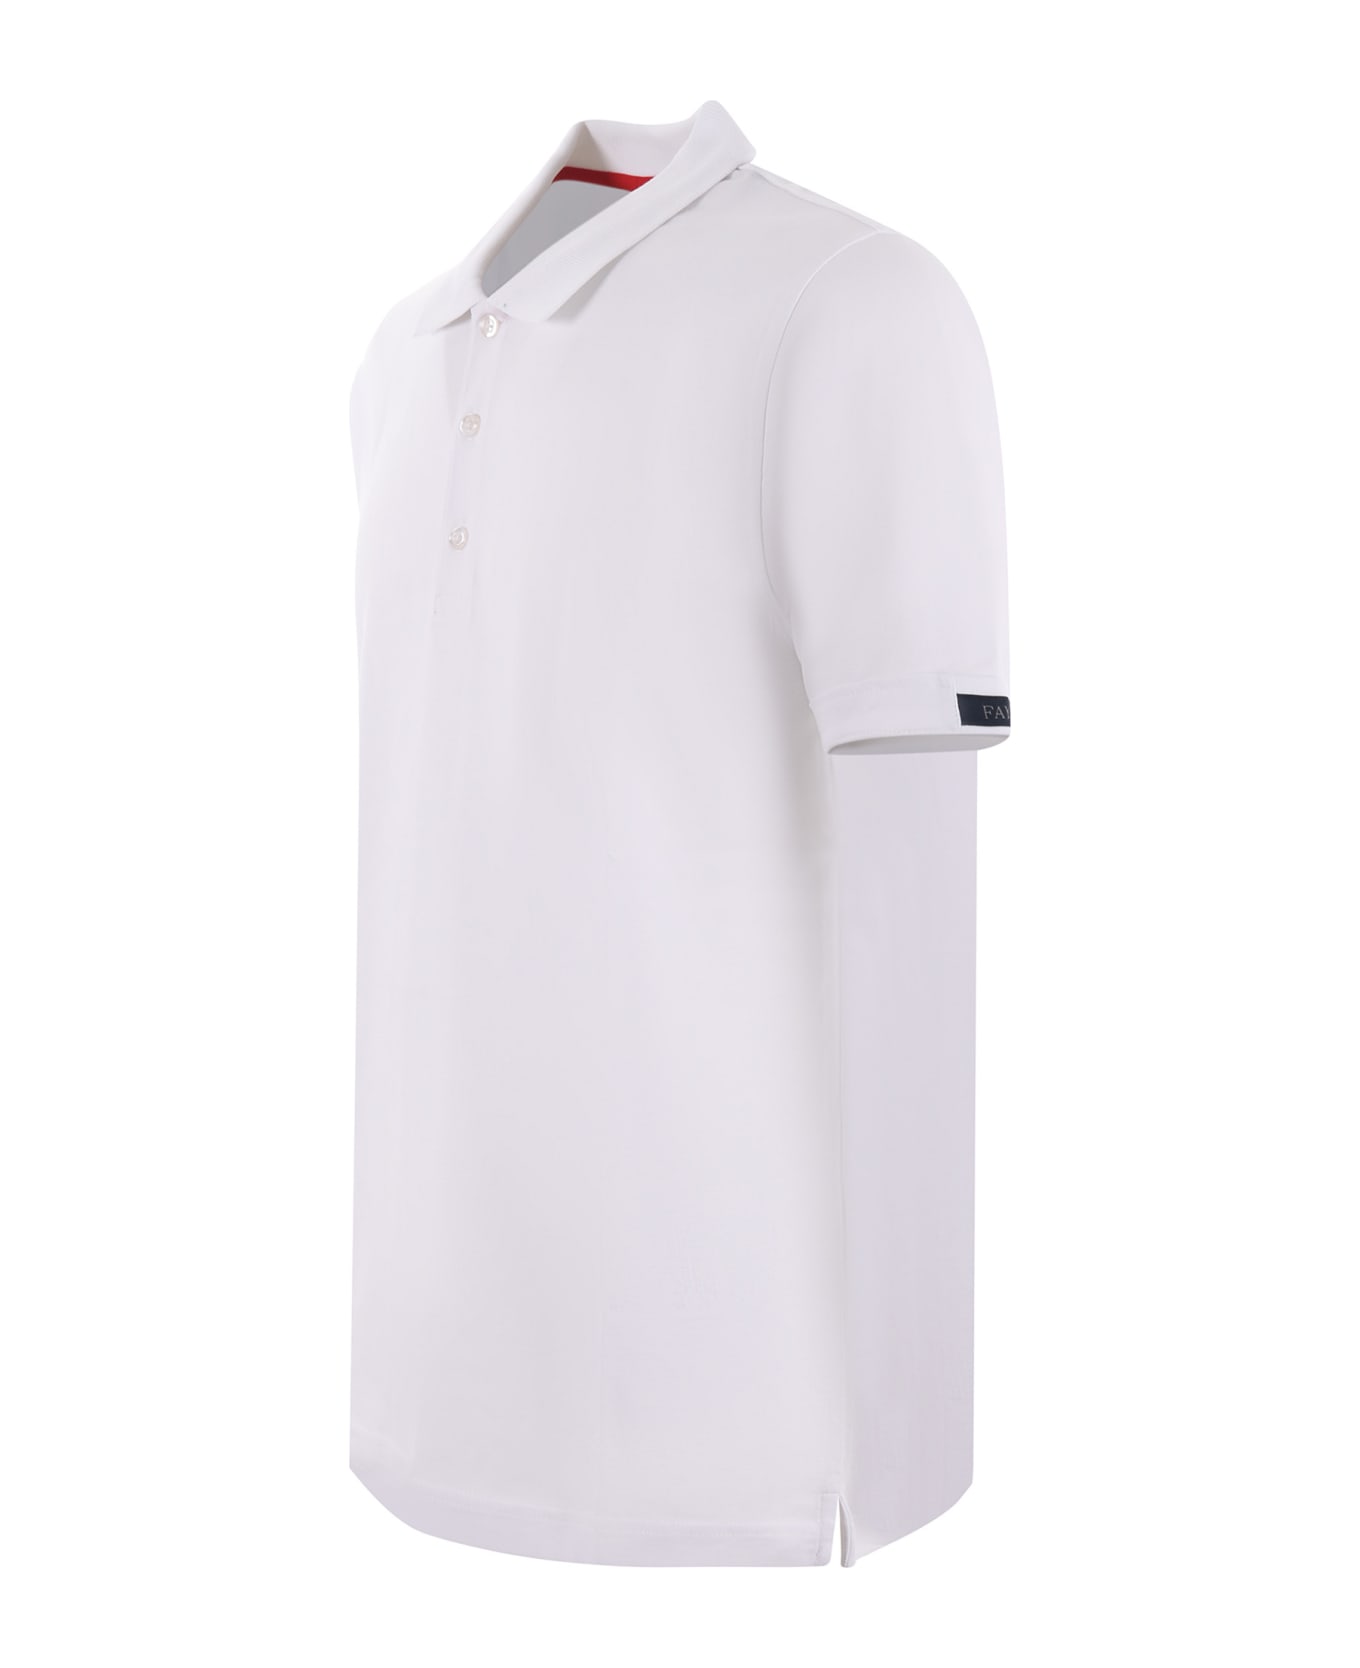 Fay Polo Shirt - Bianco